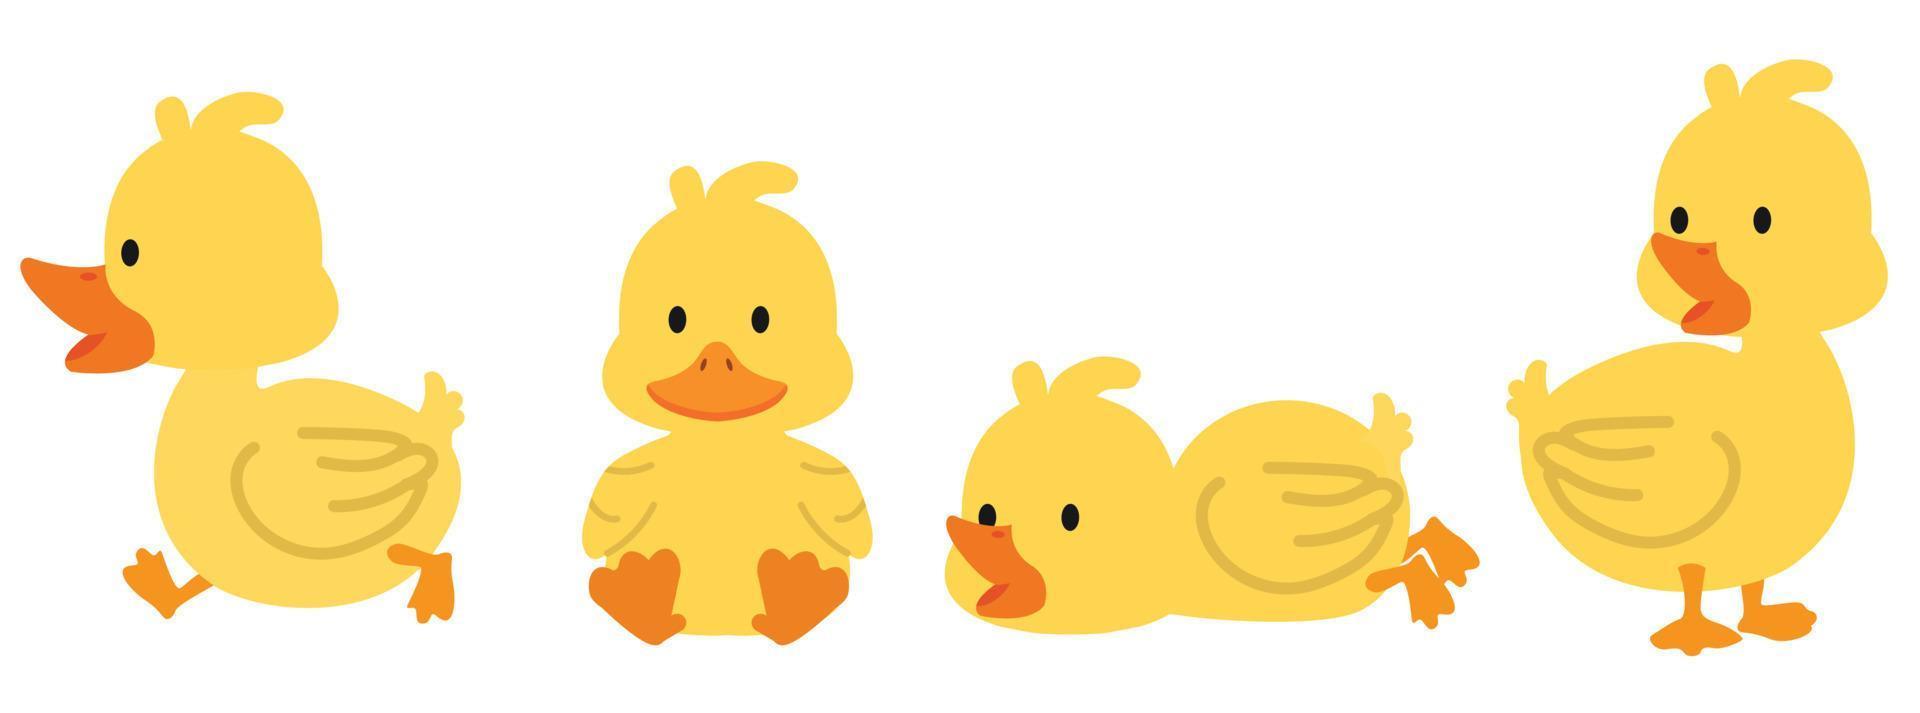 Cute yellow ducks cartoon collcetion set vector